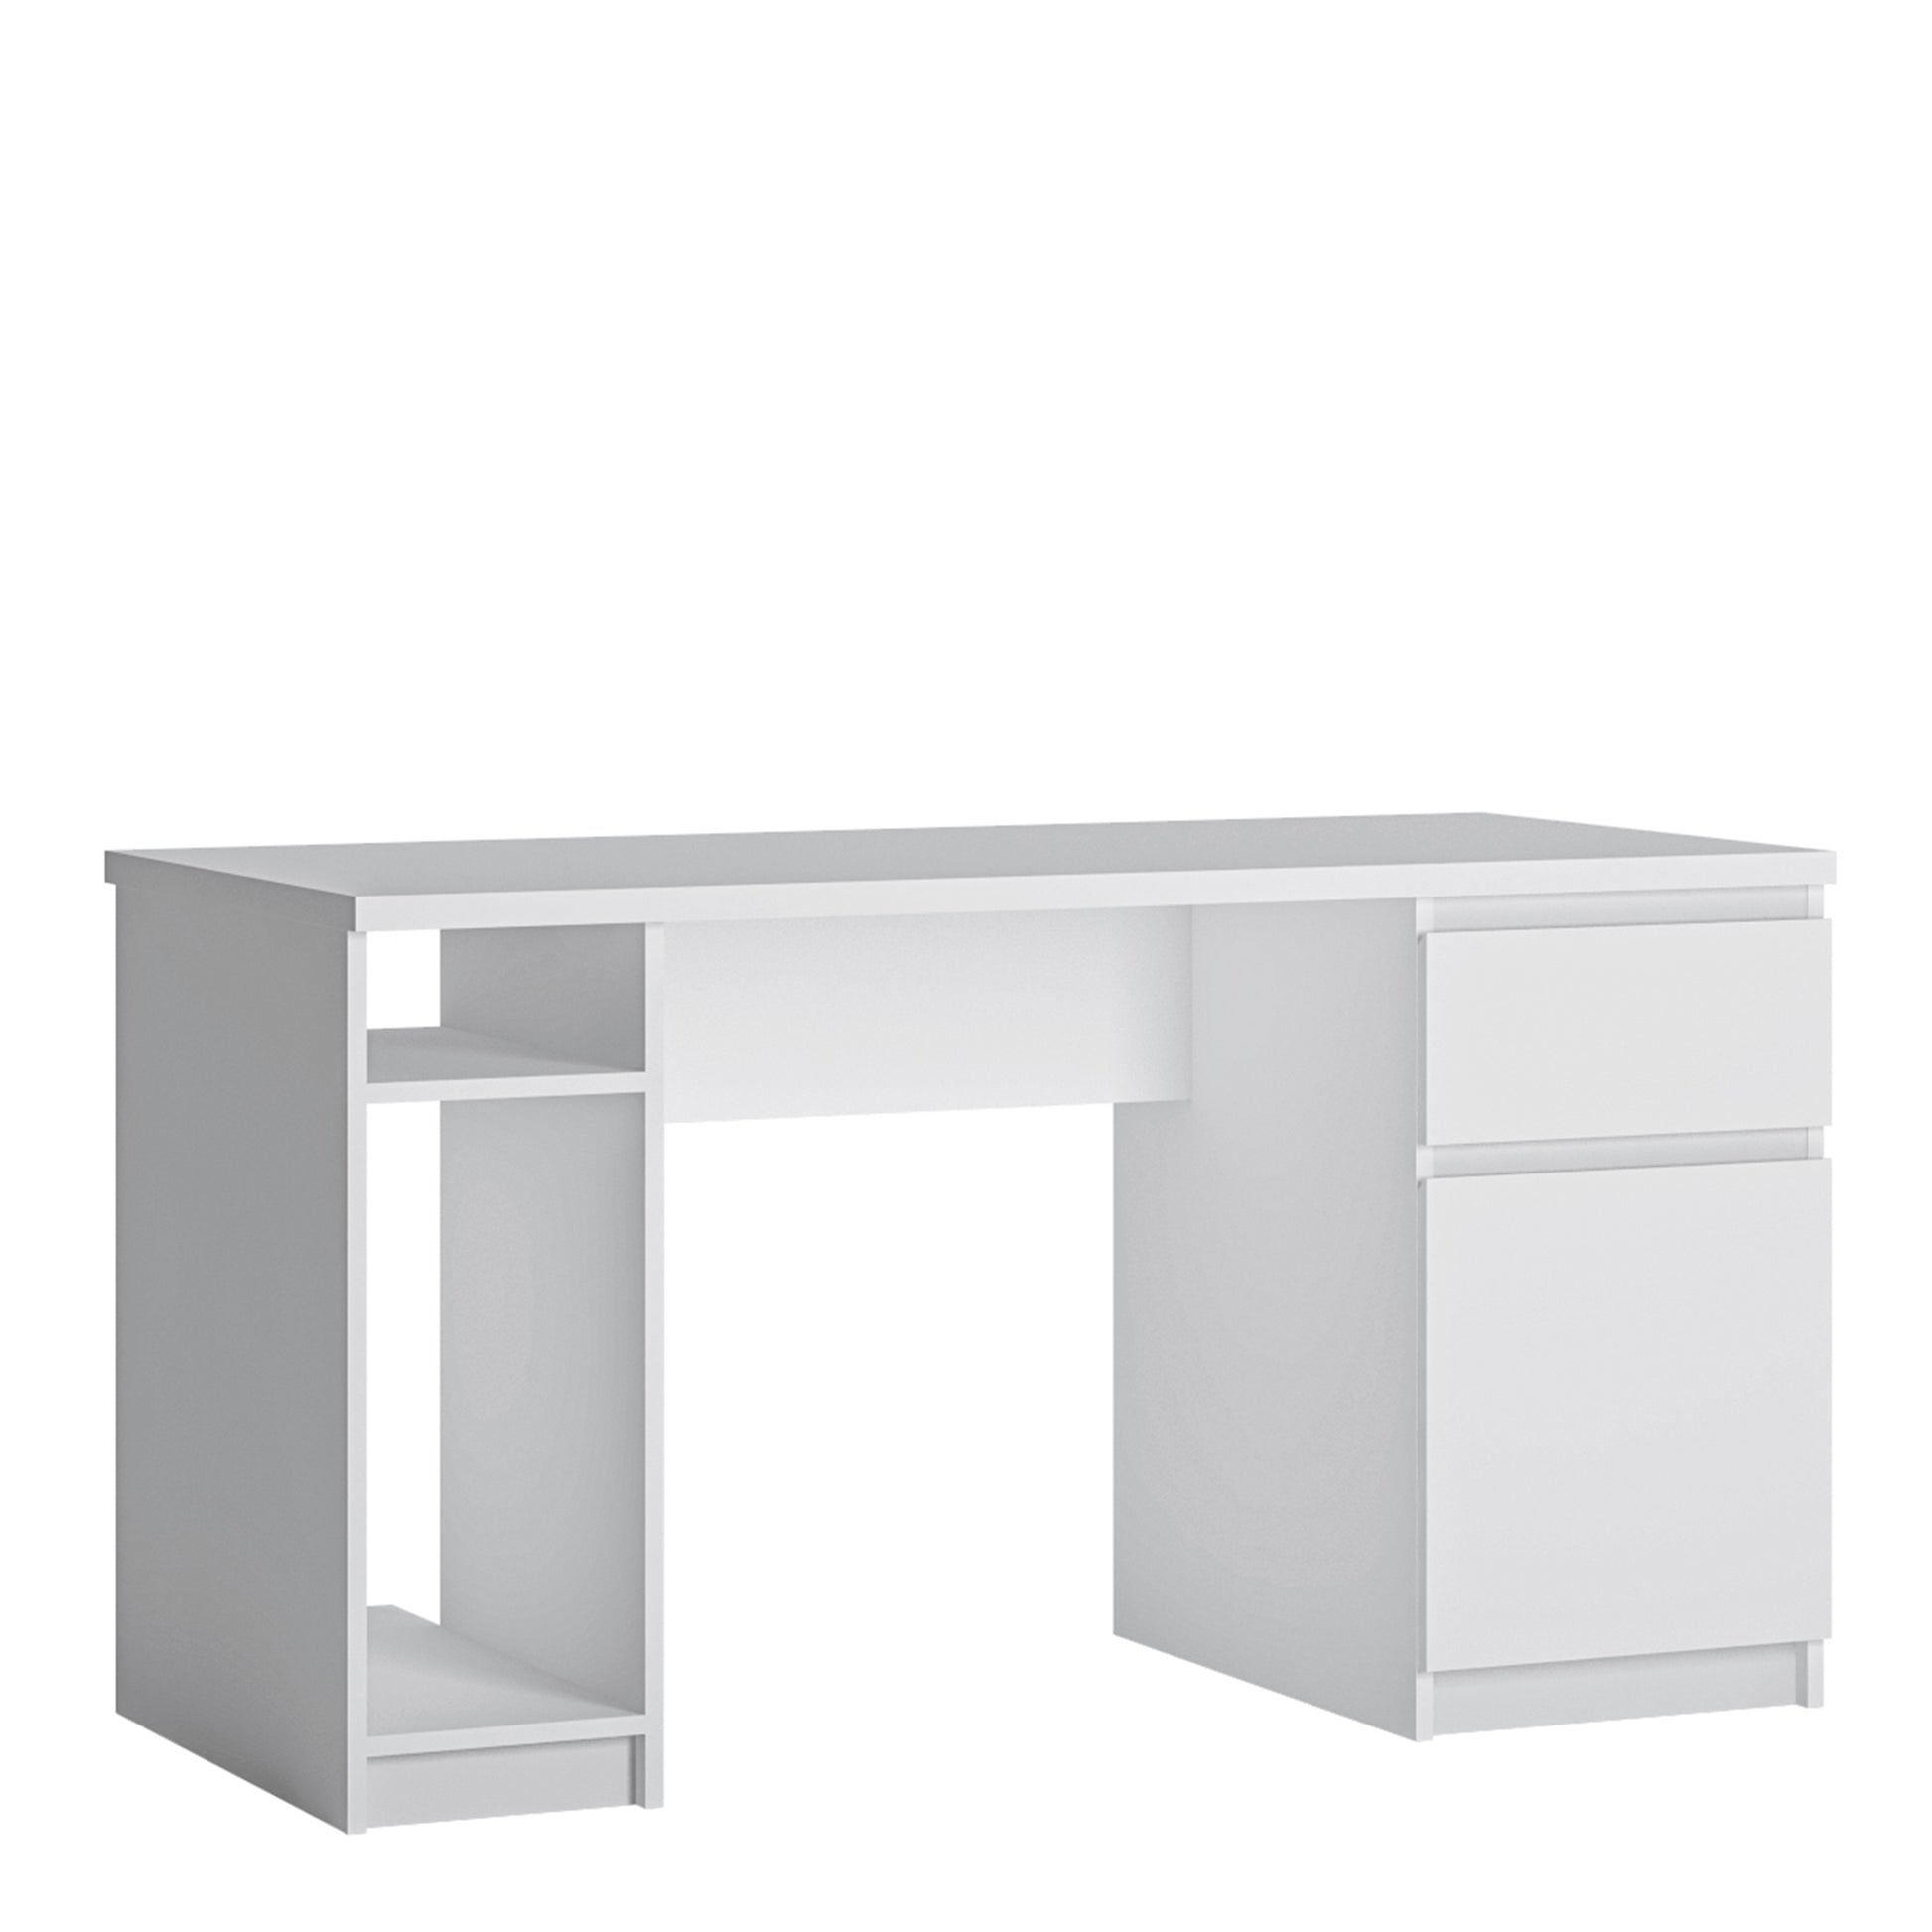 Fribo White Fribo 1 door 1 drawer twin pedestal desk in White